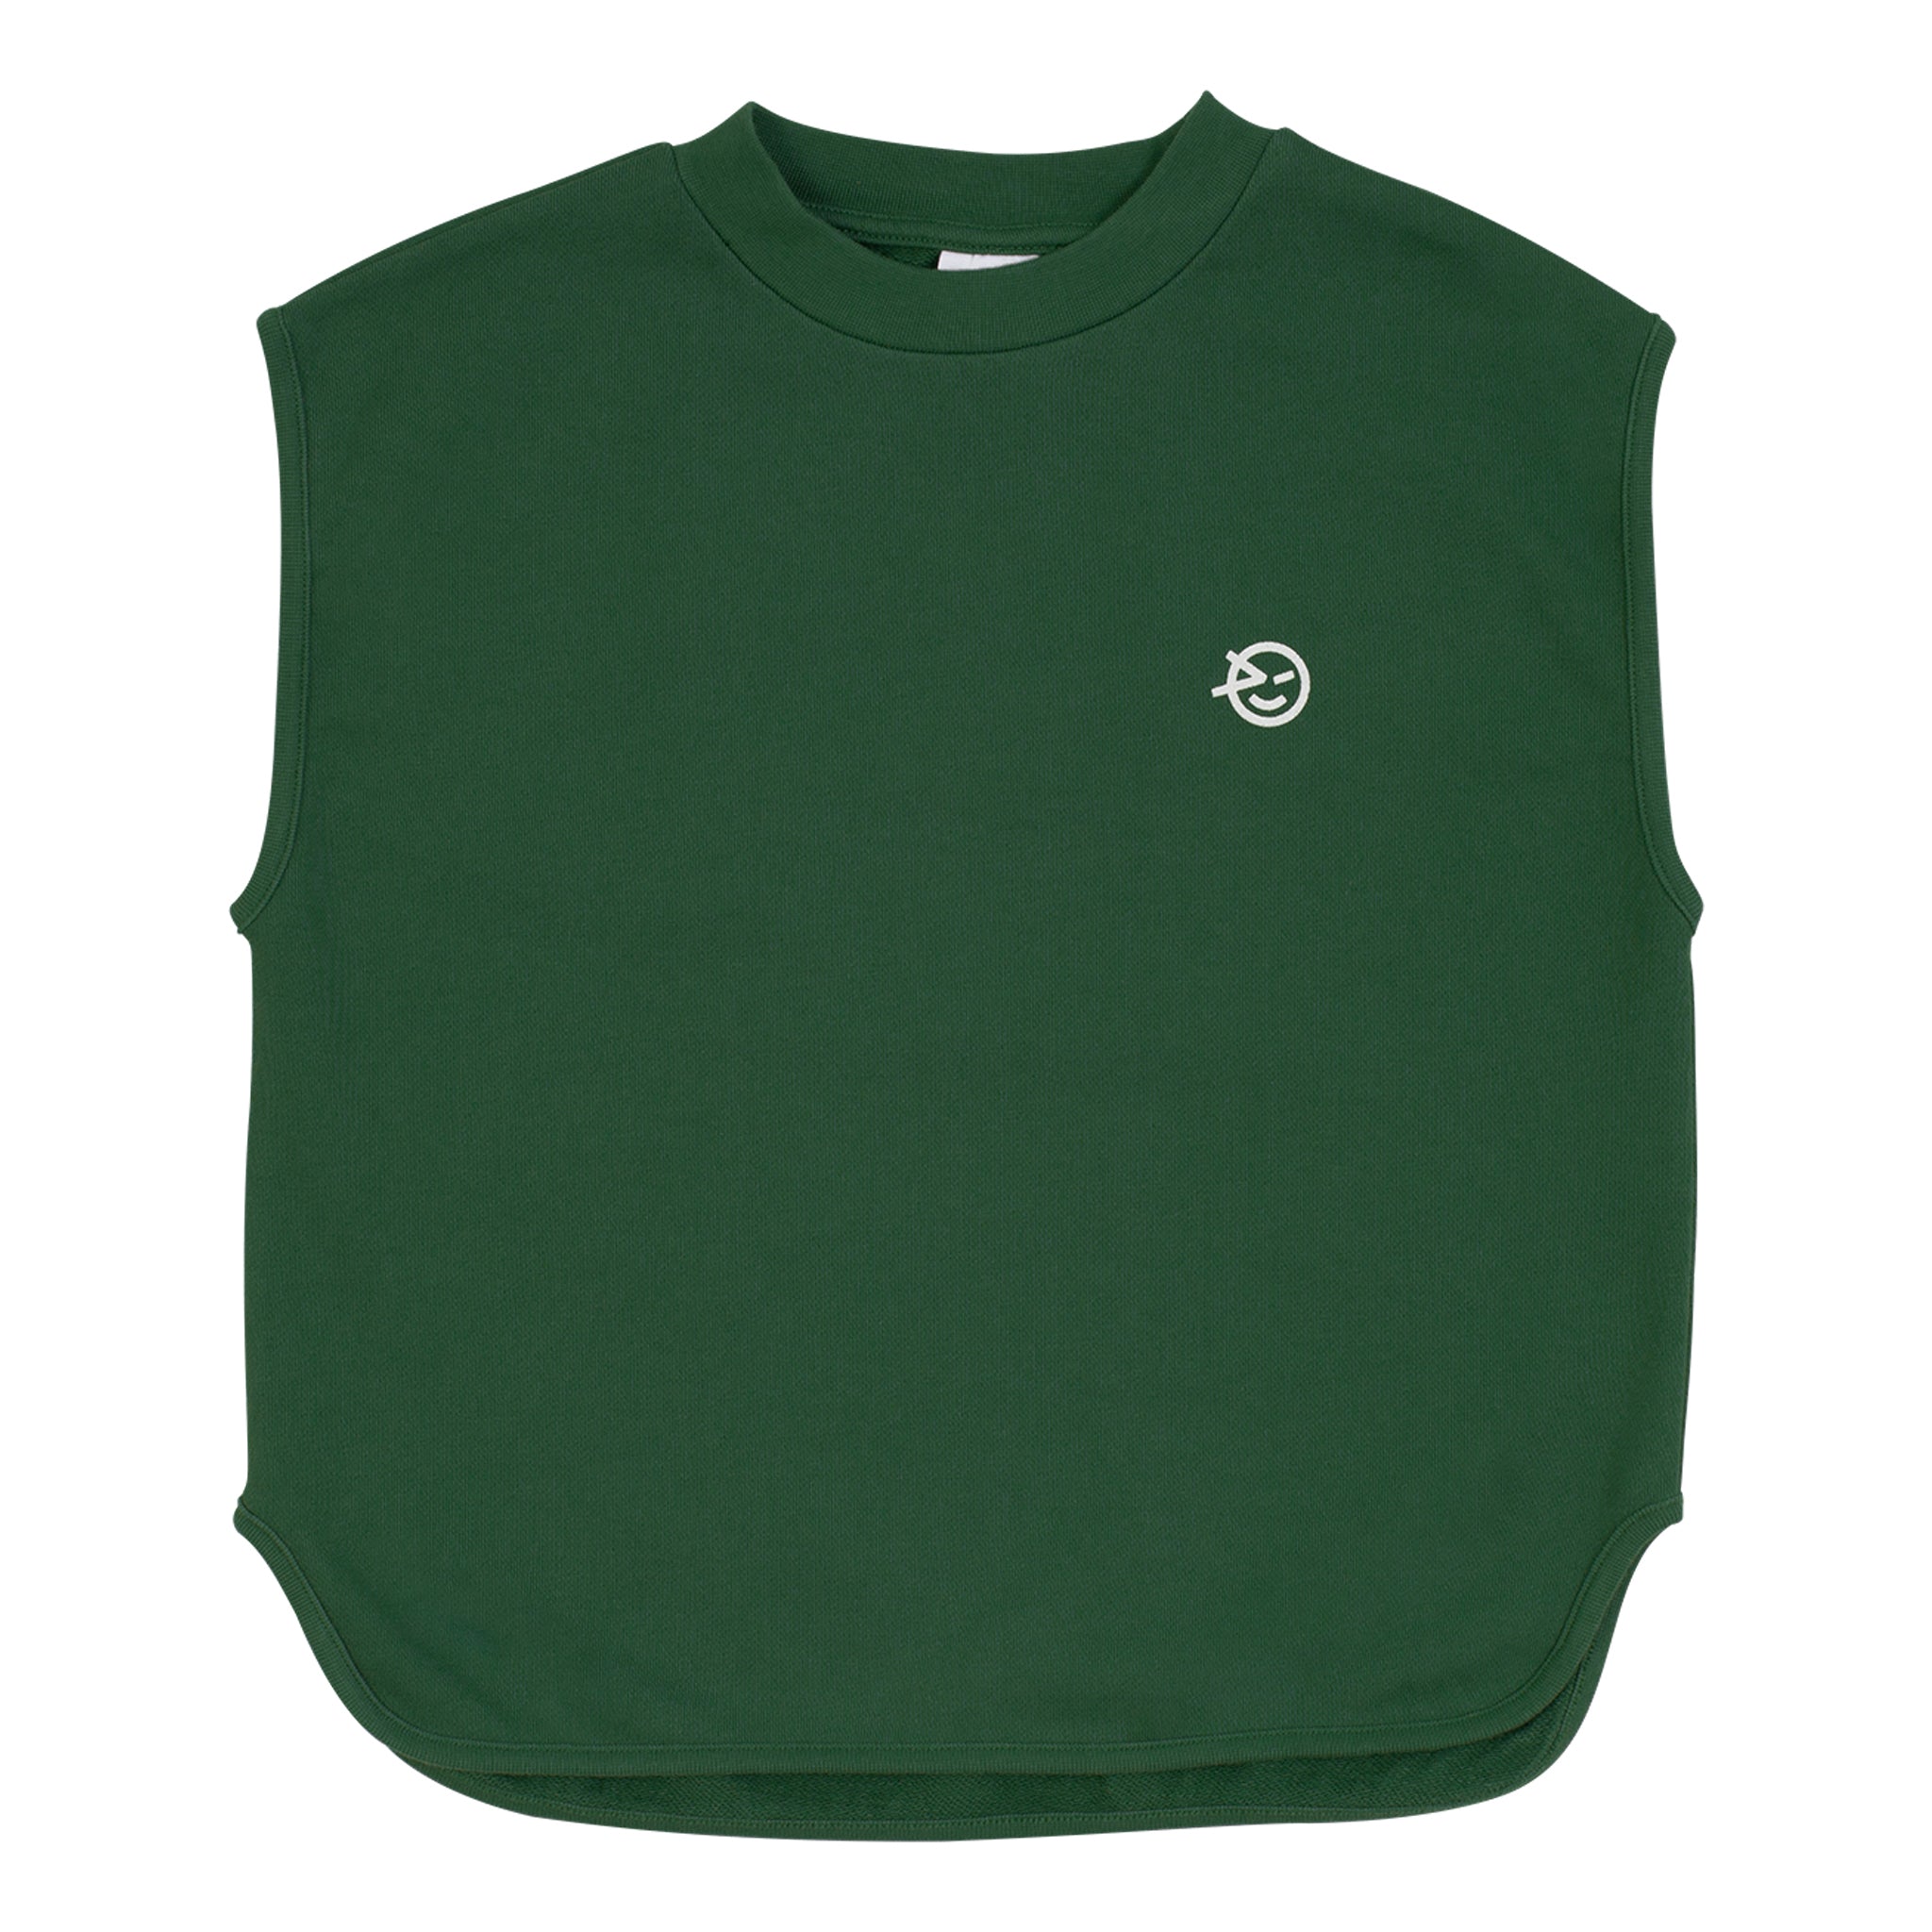 Boys & Girls Green Cotton Vest